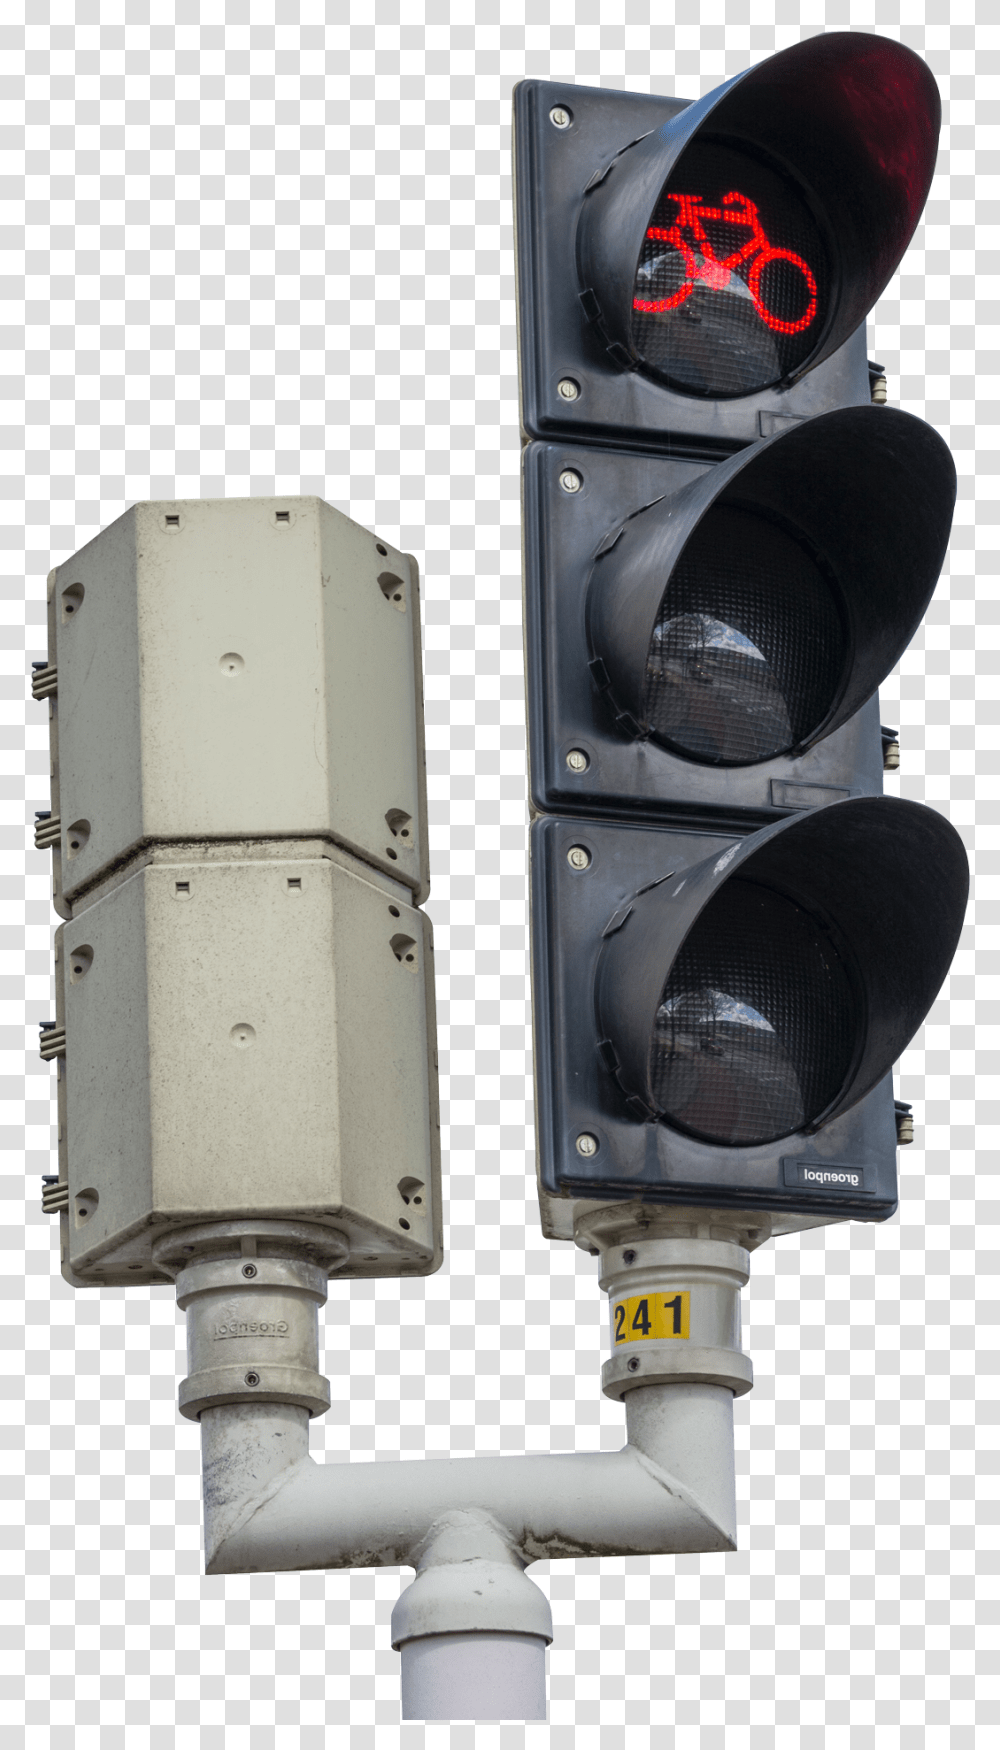 Traffic Images Pngpix Traffic Light Transparent Png